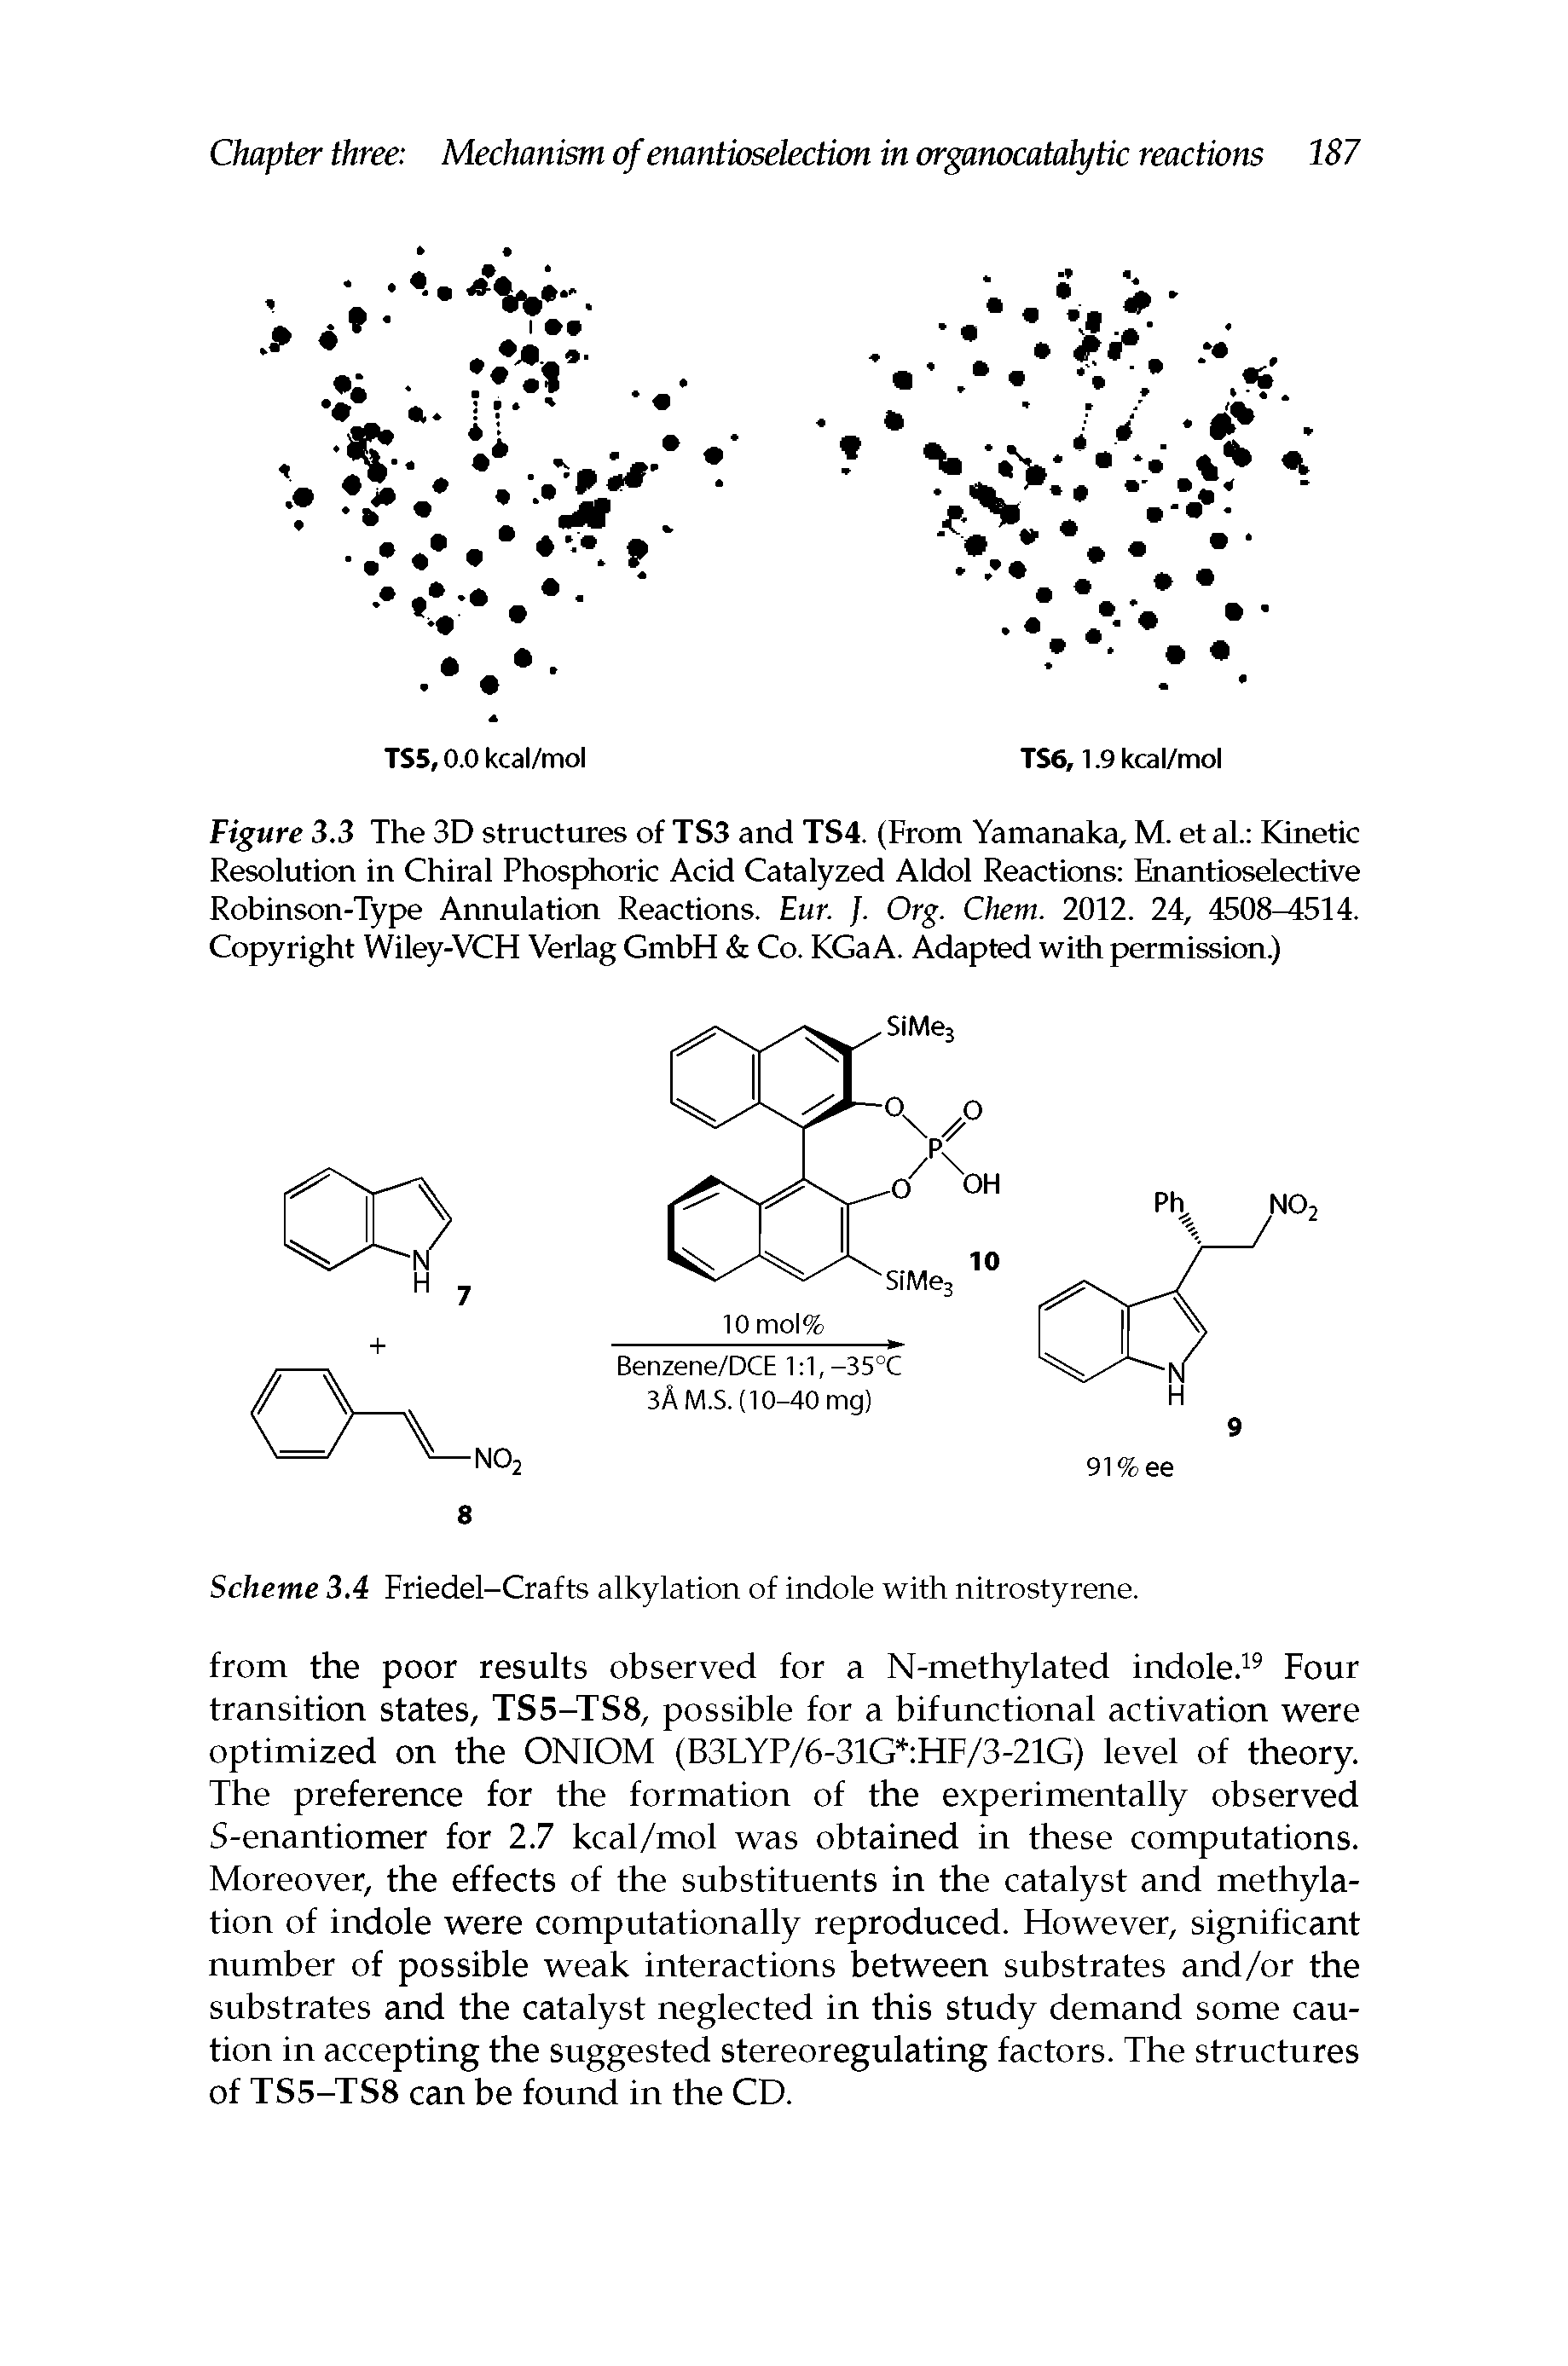 Scheme 3.4 Friedel-Crafts alkylation of indole with nitrostyrene.